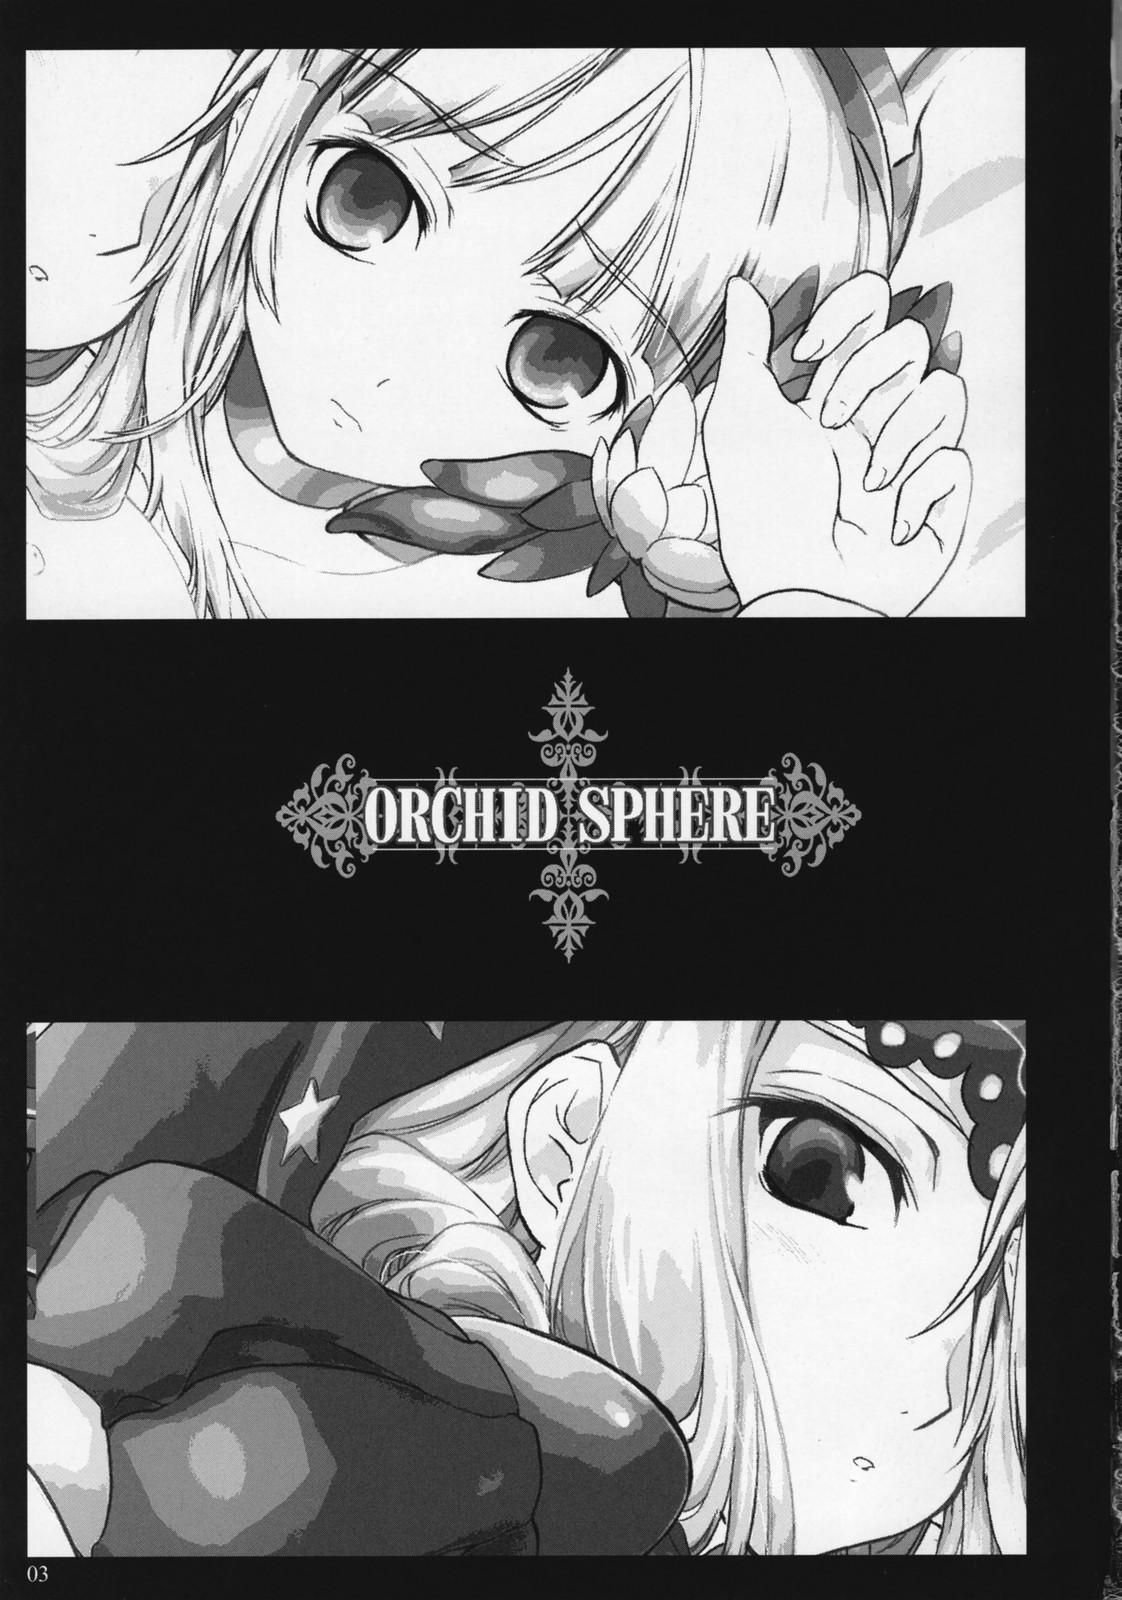 Grande Orchid Sphere - Odin sphere Duro - Page 2